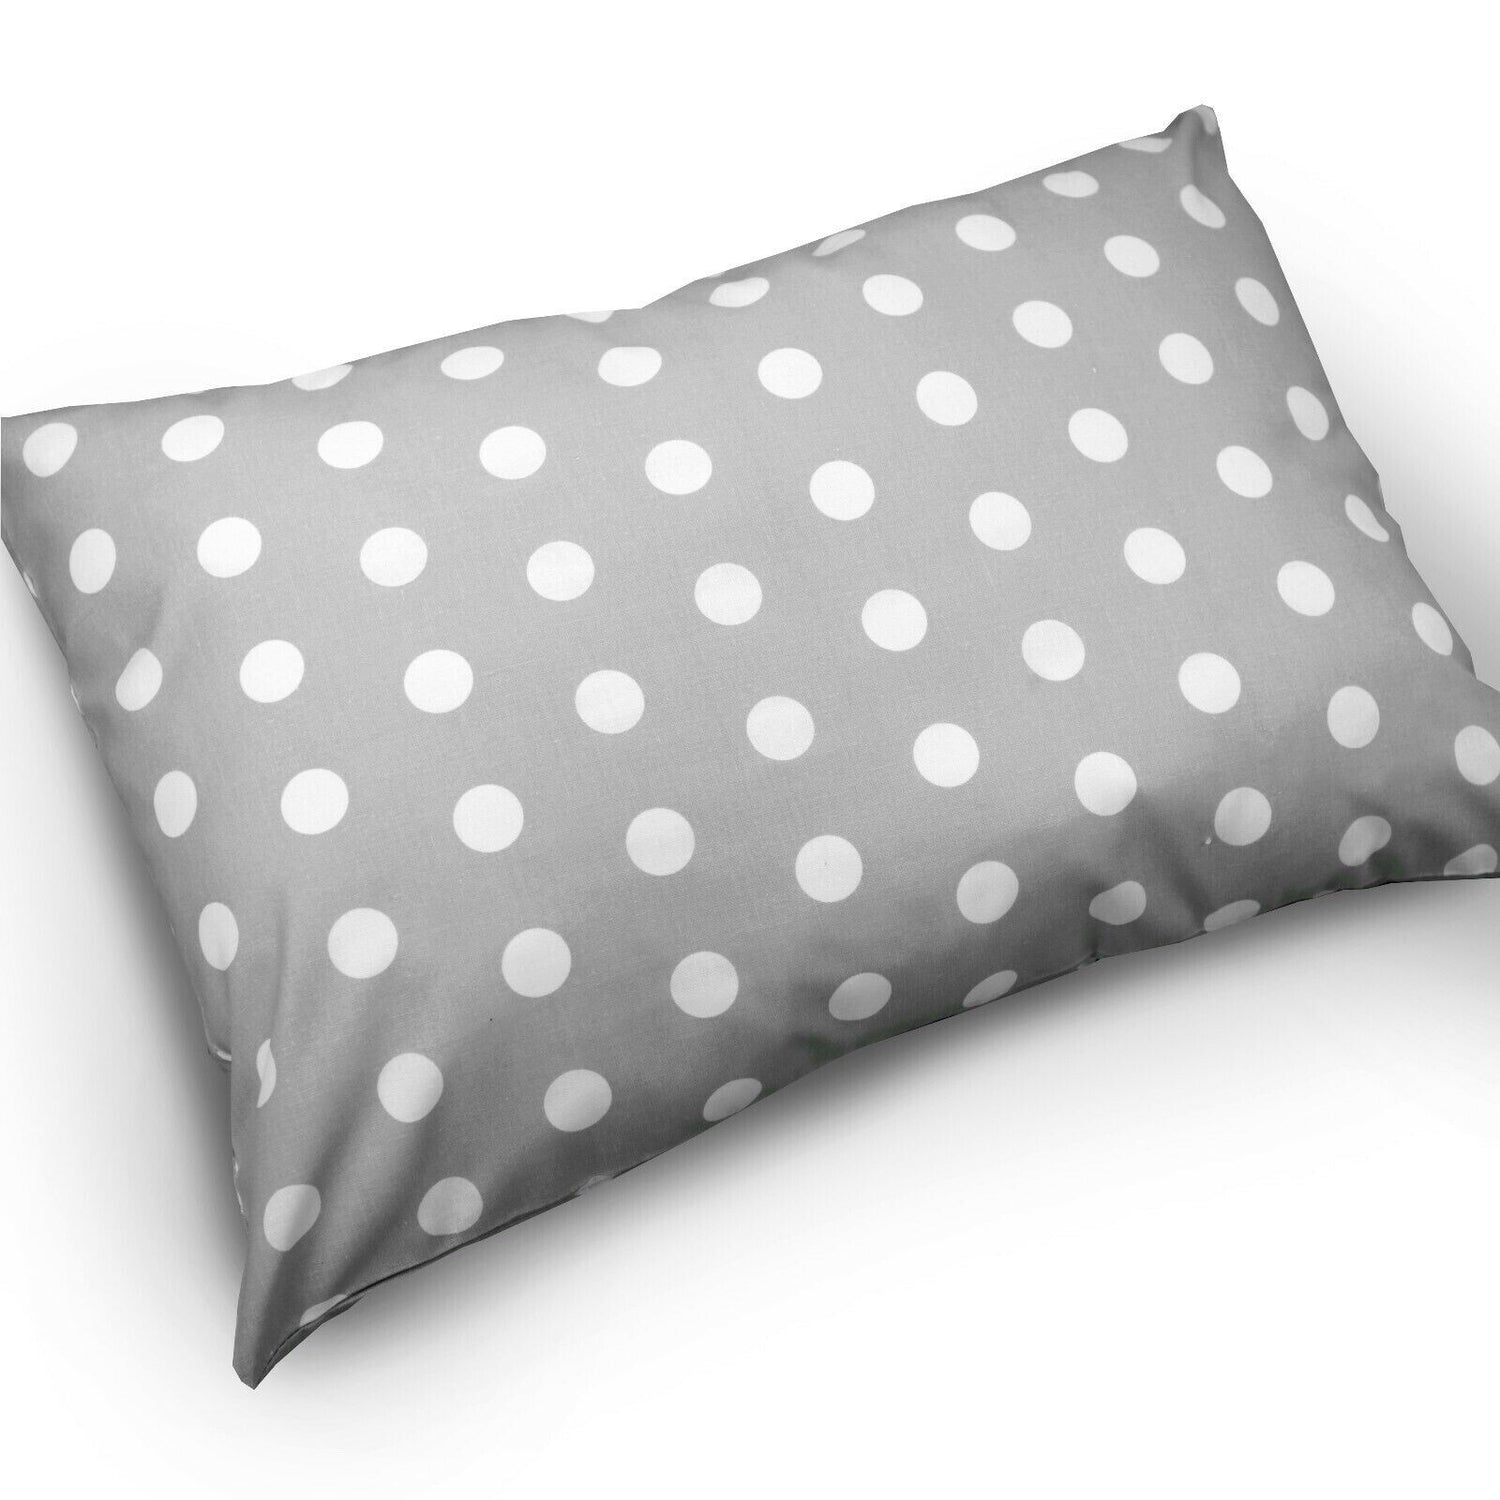 Pillow case ANTI-ALLERGENIC with zipper closure 60x40cm Cotton Dots Grey